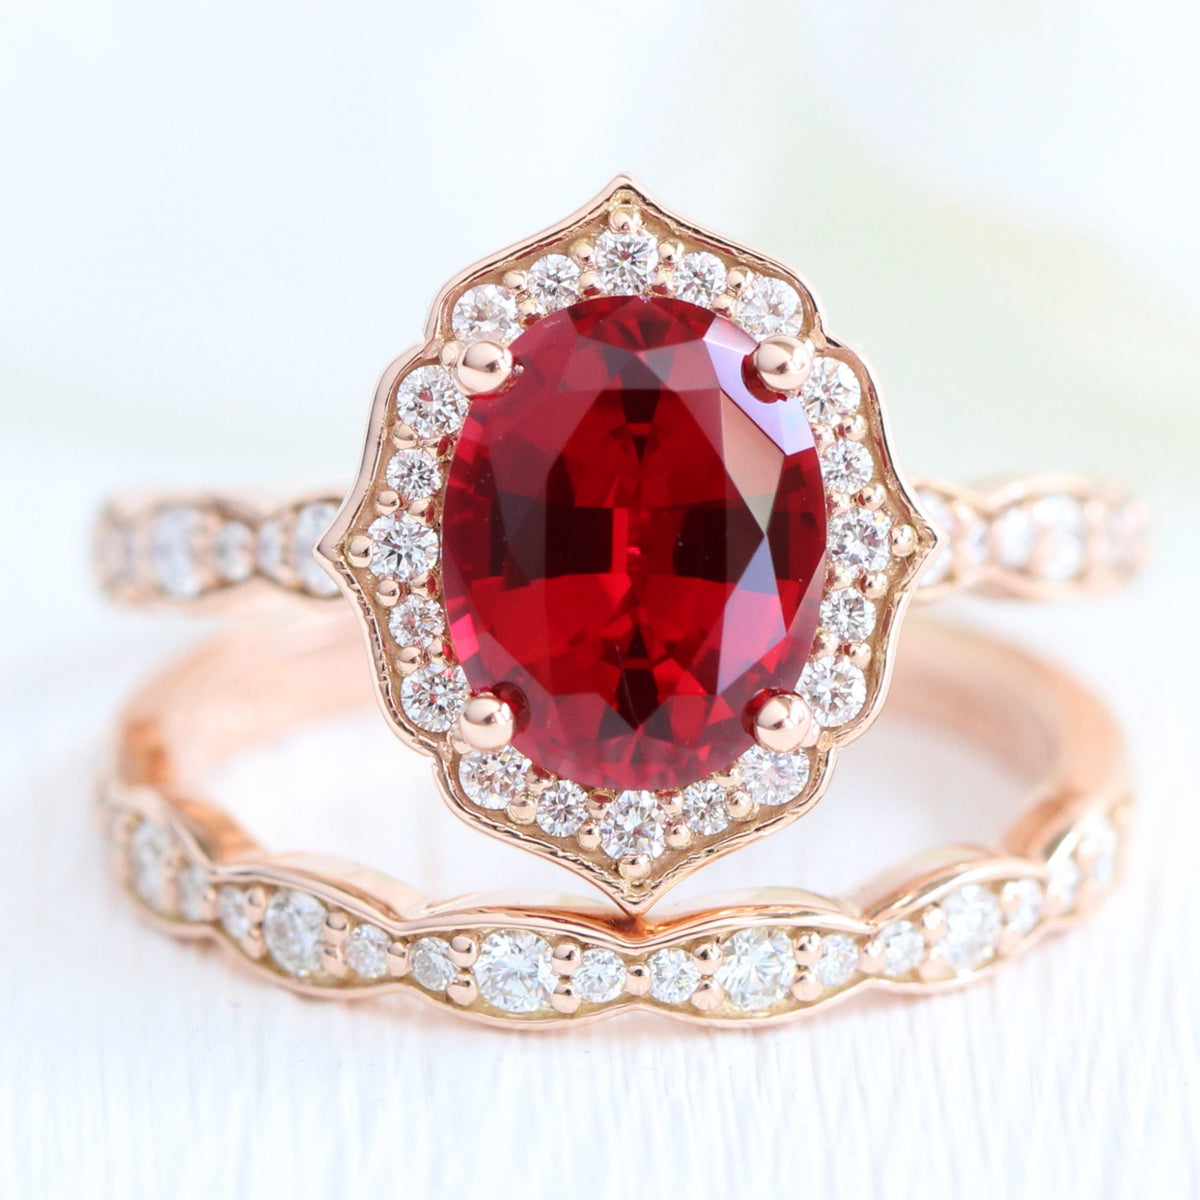 Vintage halo diamond large ruby ring stack rose gold eternity wedding band la more design jewelry